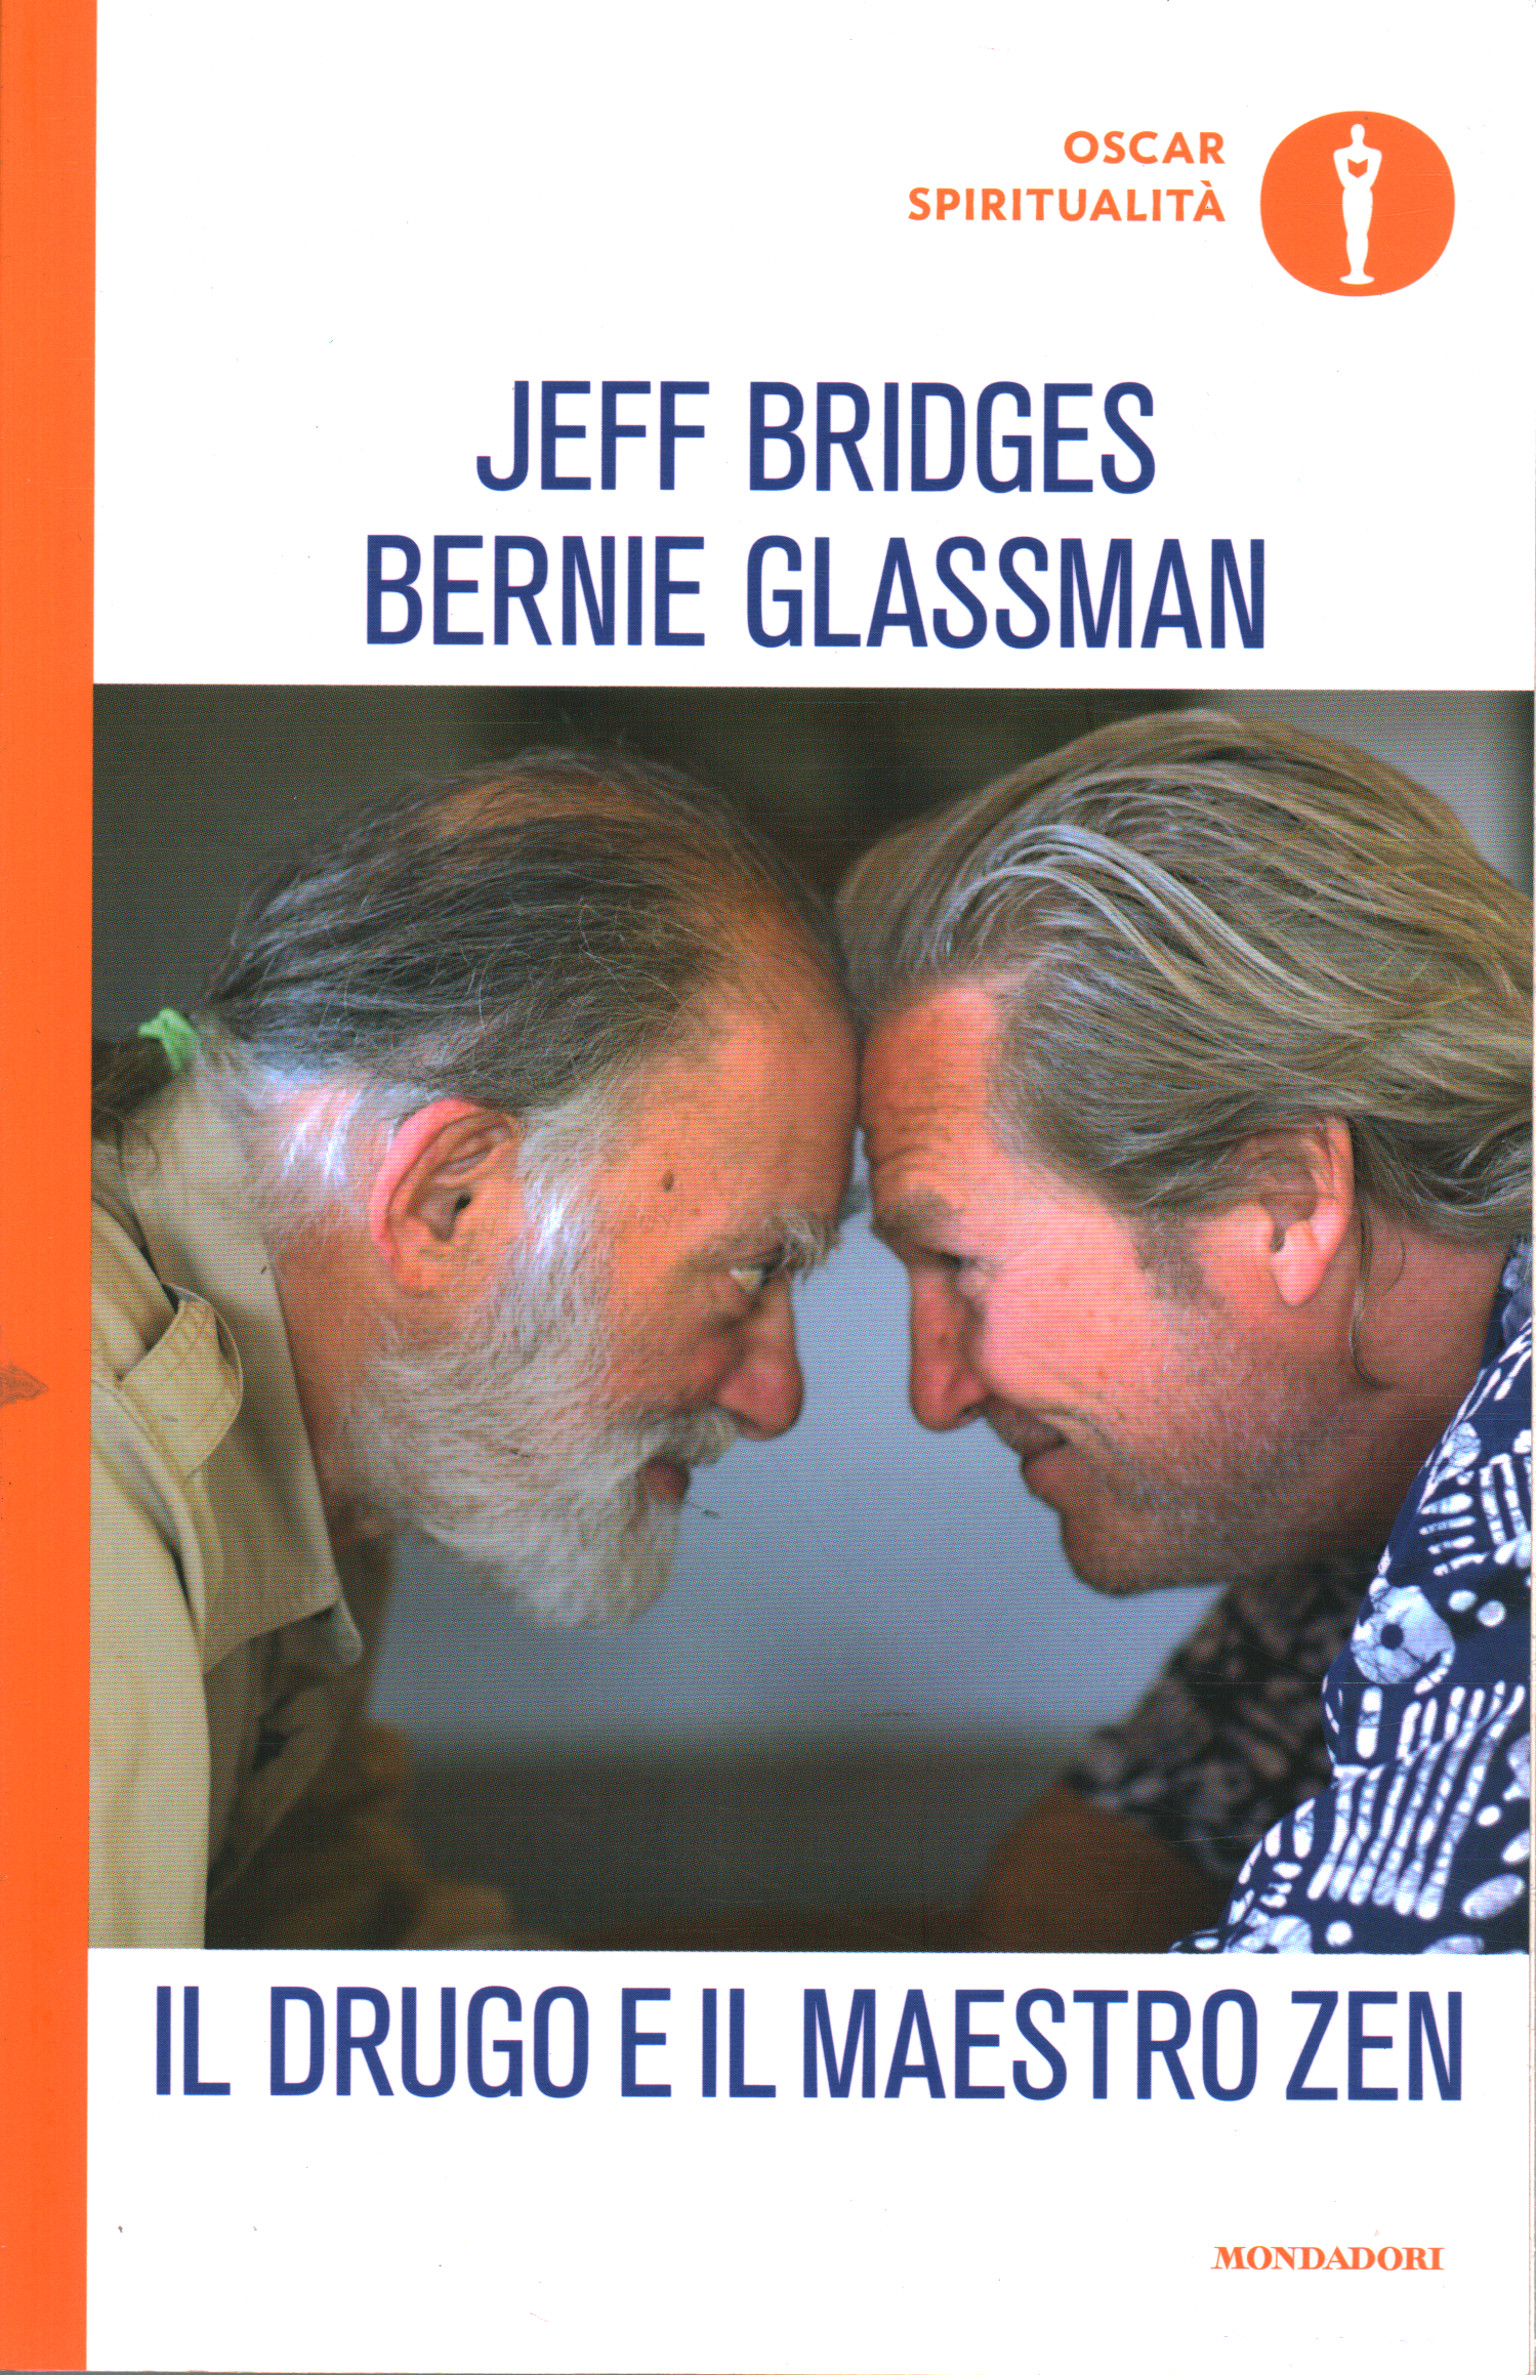 Il Drugo e il maestro Zen, Jeff Bridges Bernie Glassman